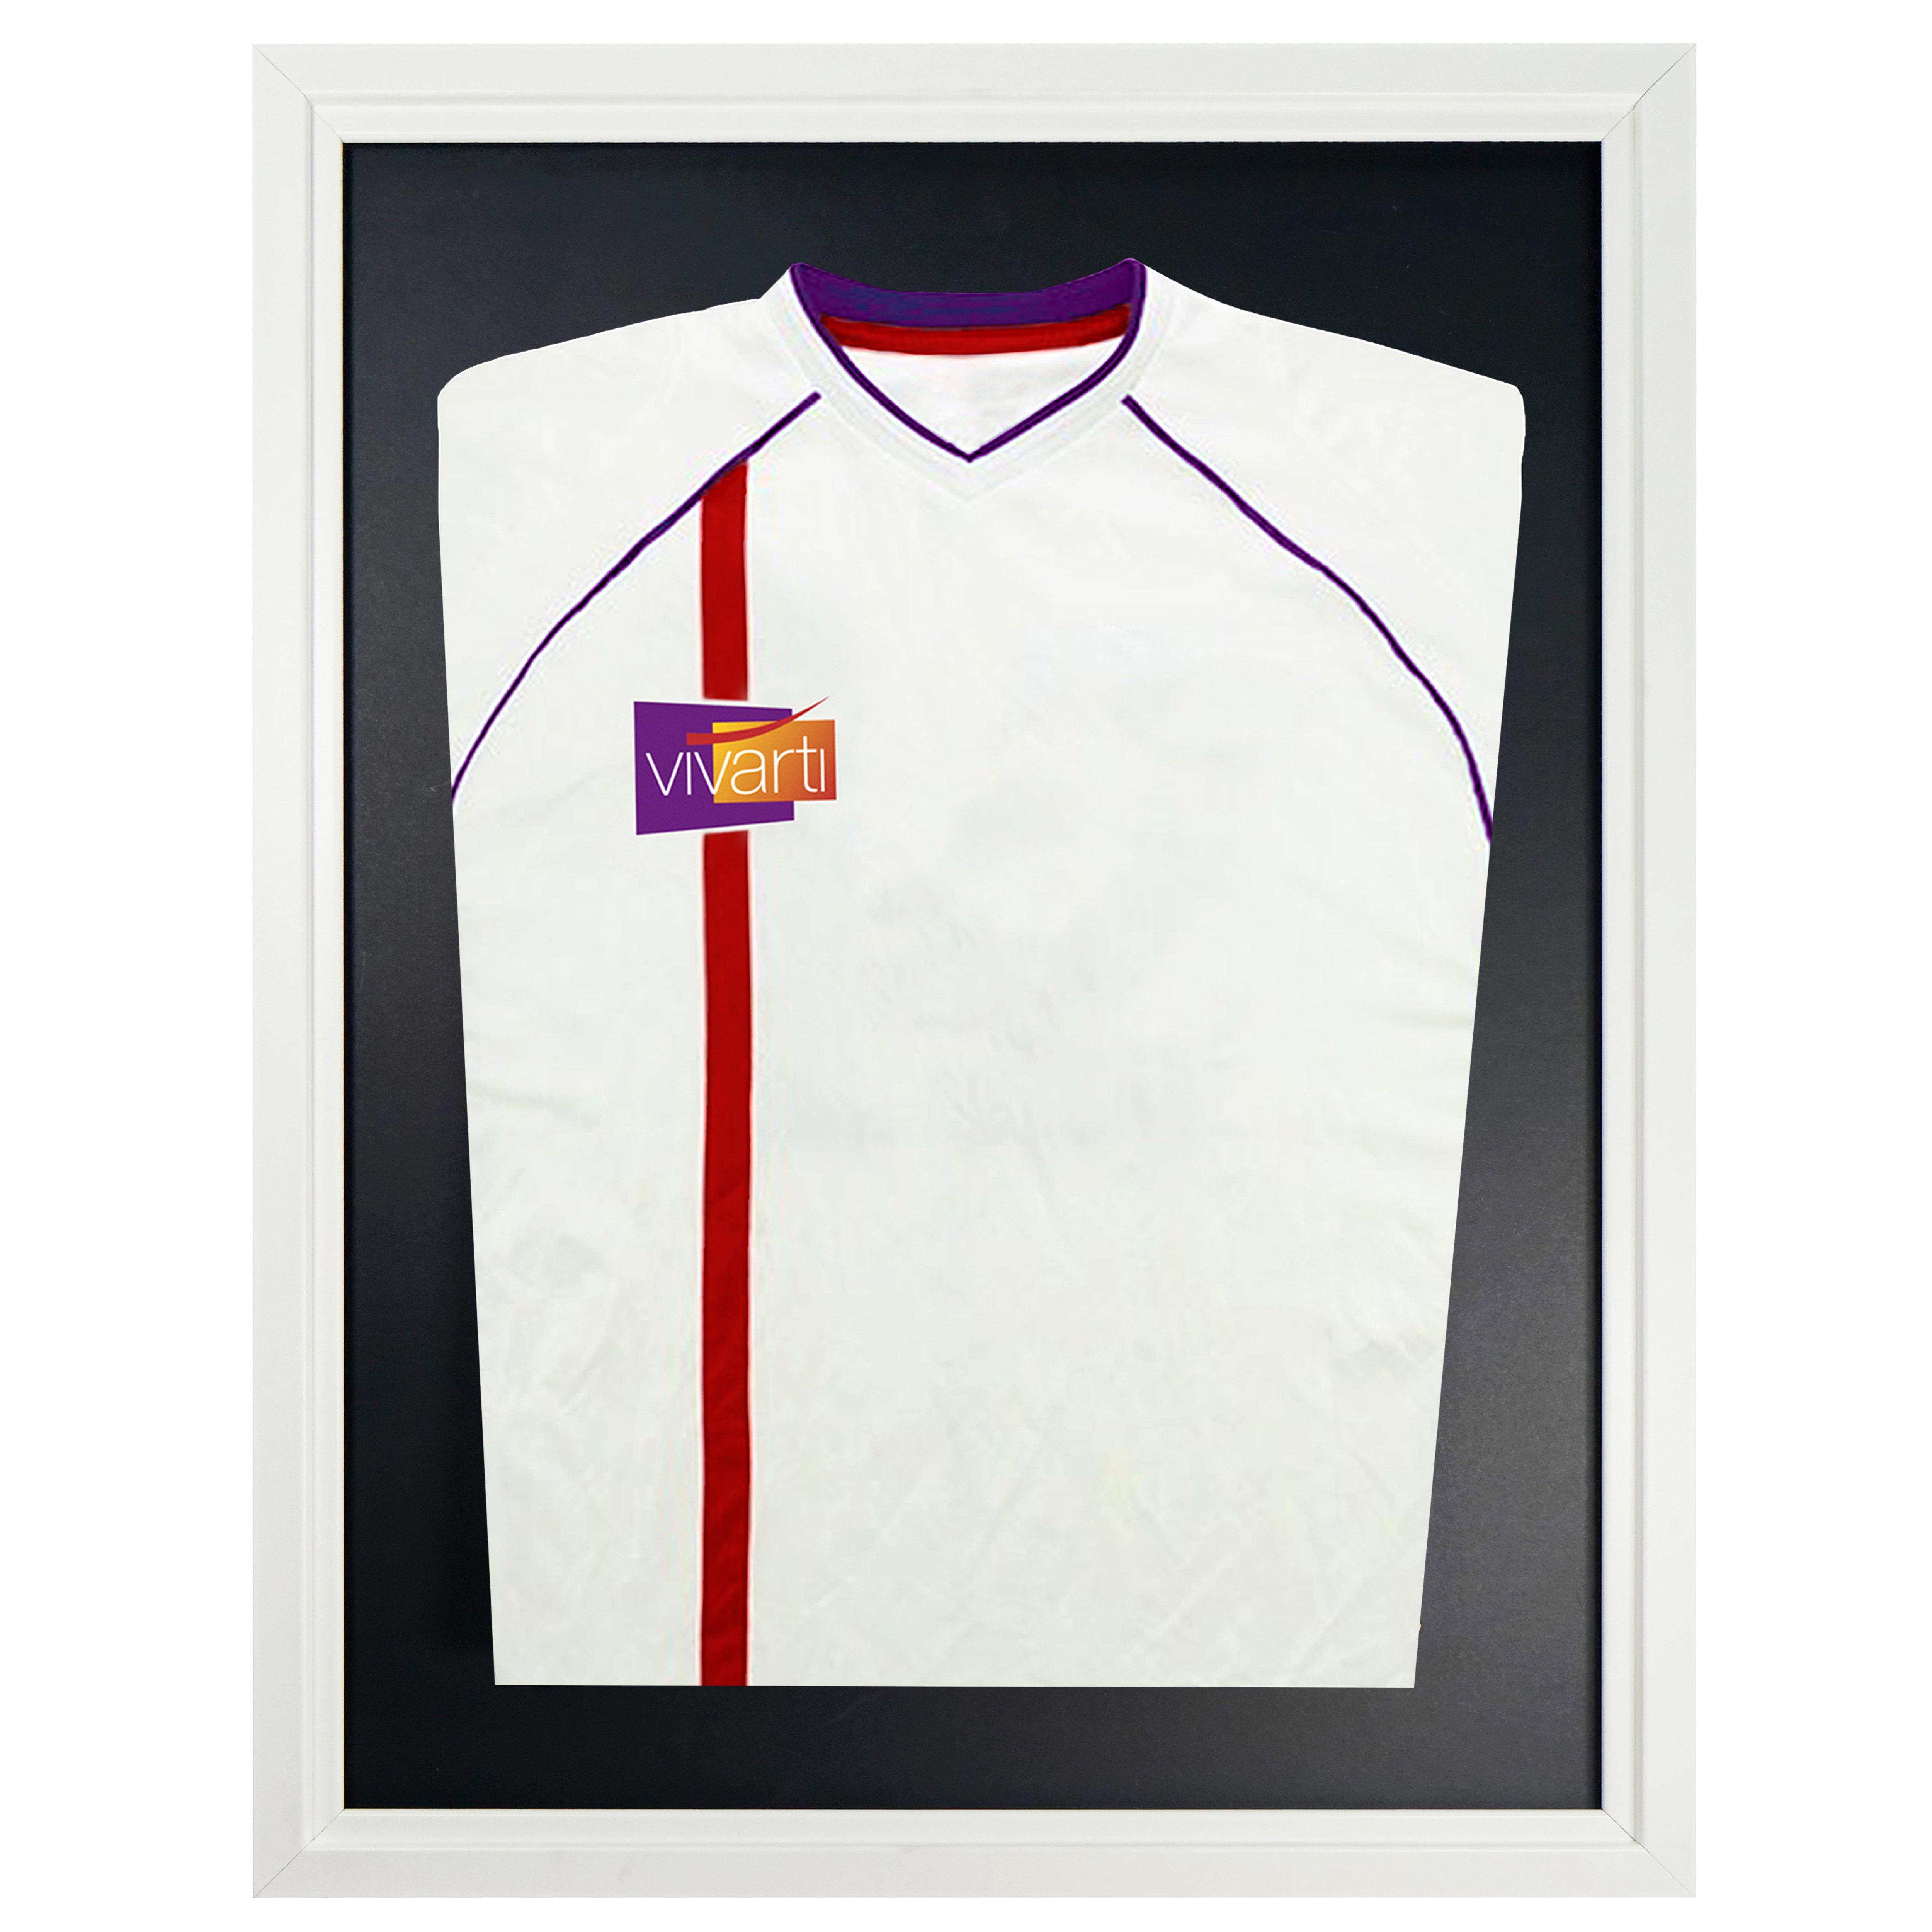 Junior Tapered Standard Sports Shirt Display Frame with White Frame and White Inner Frame 50 x 70cm